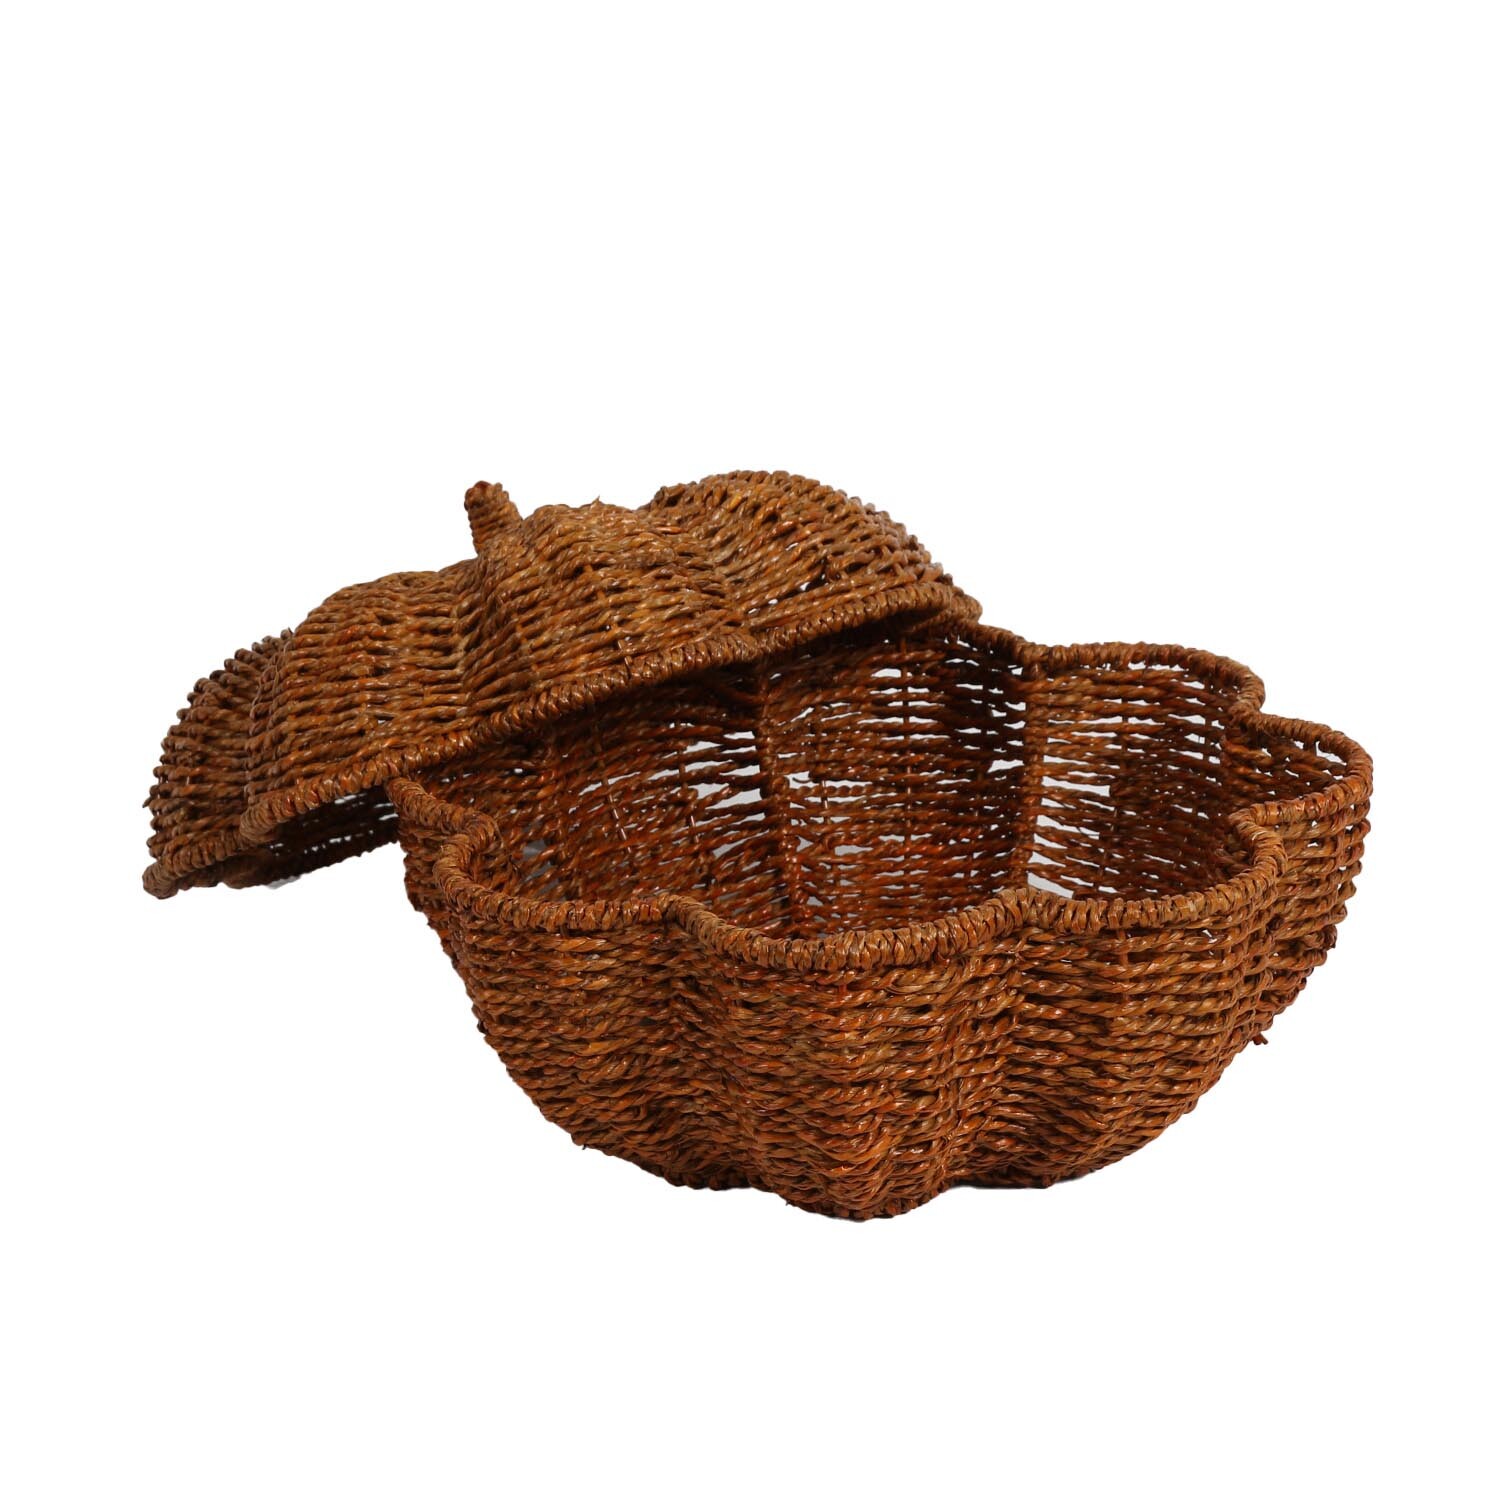 Autumnal Pumpkin Basket - Brown Image 3